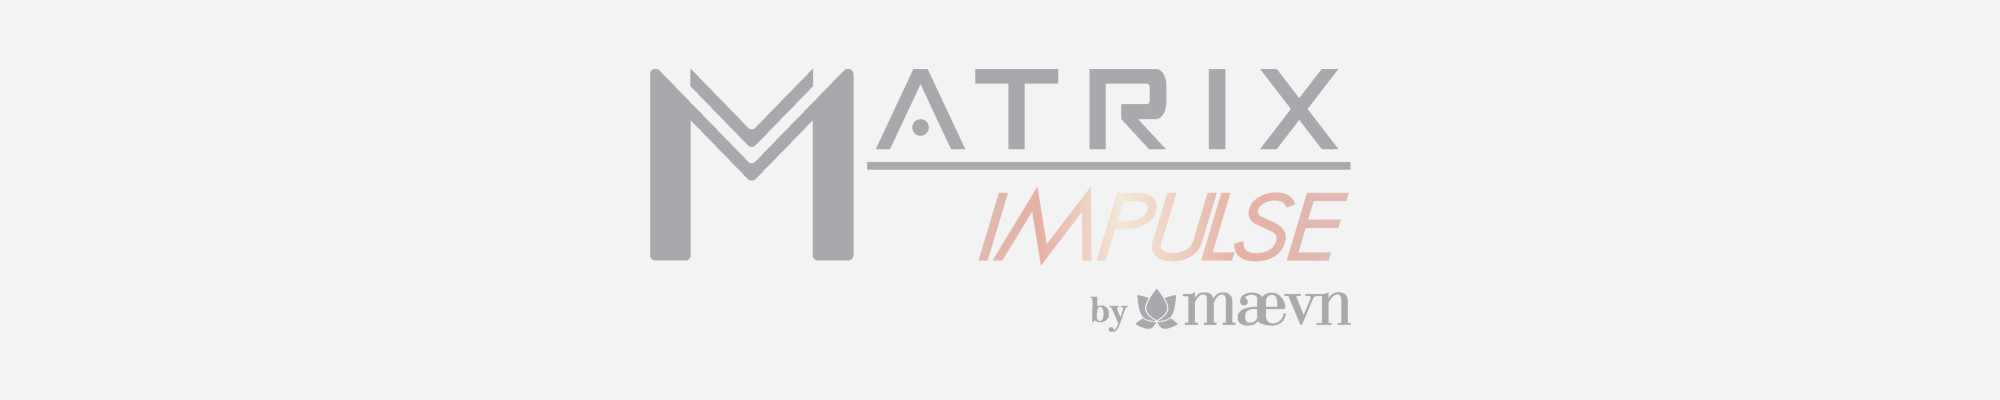 Maevn Matrix Impulse